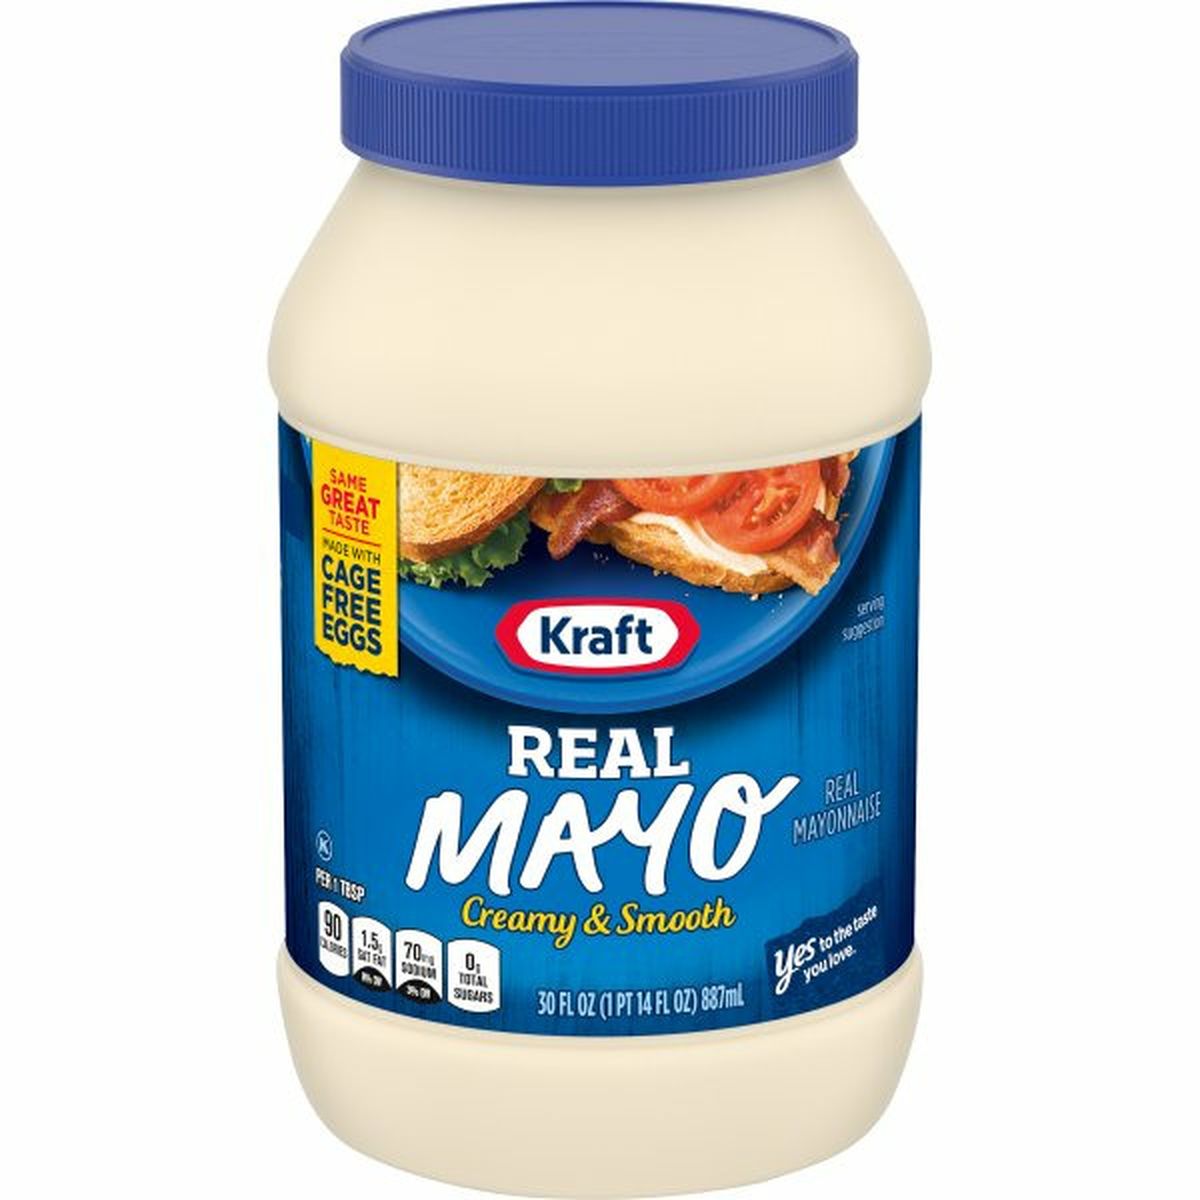 Calories in Kraft Real Mayo